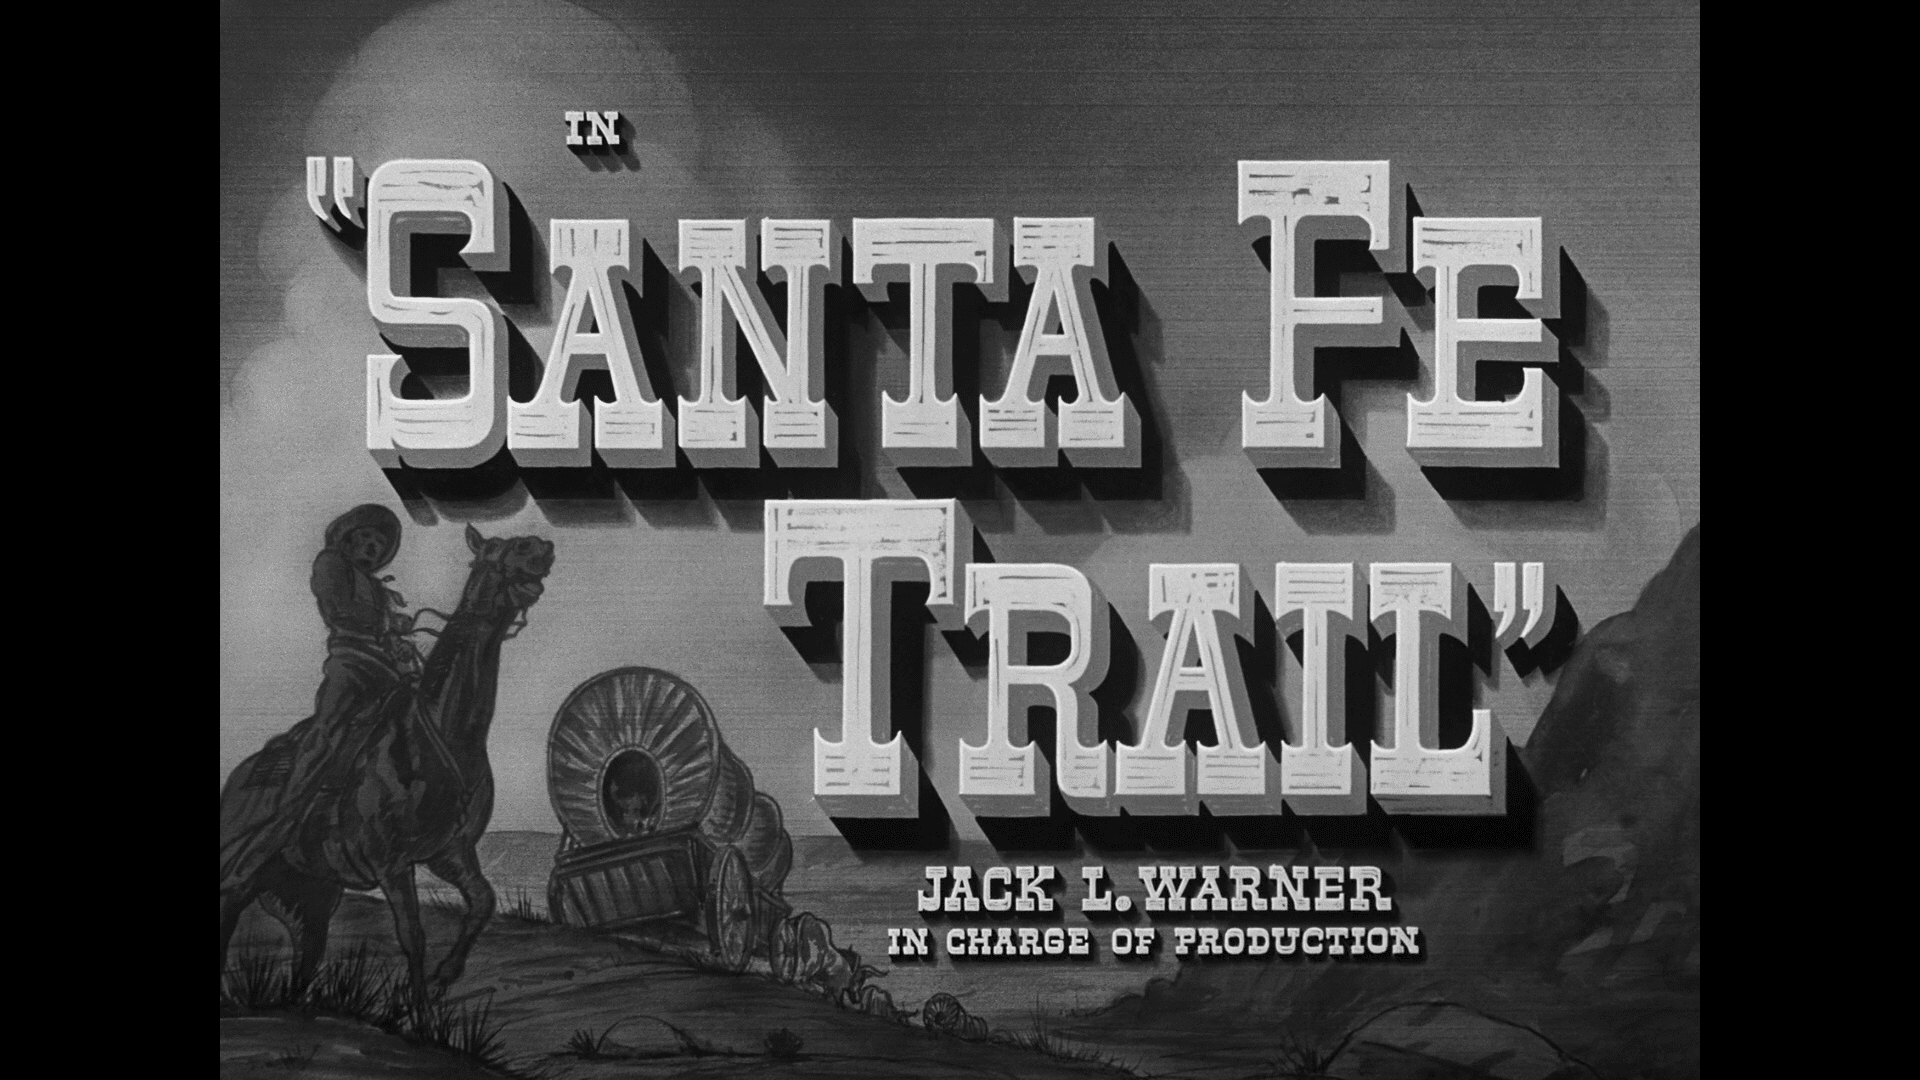 Santa Fe Trail title